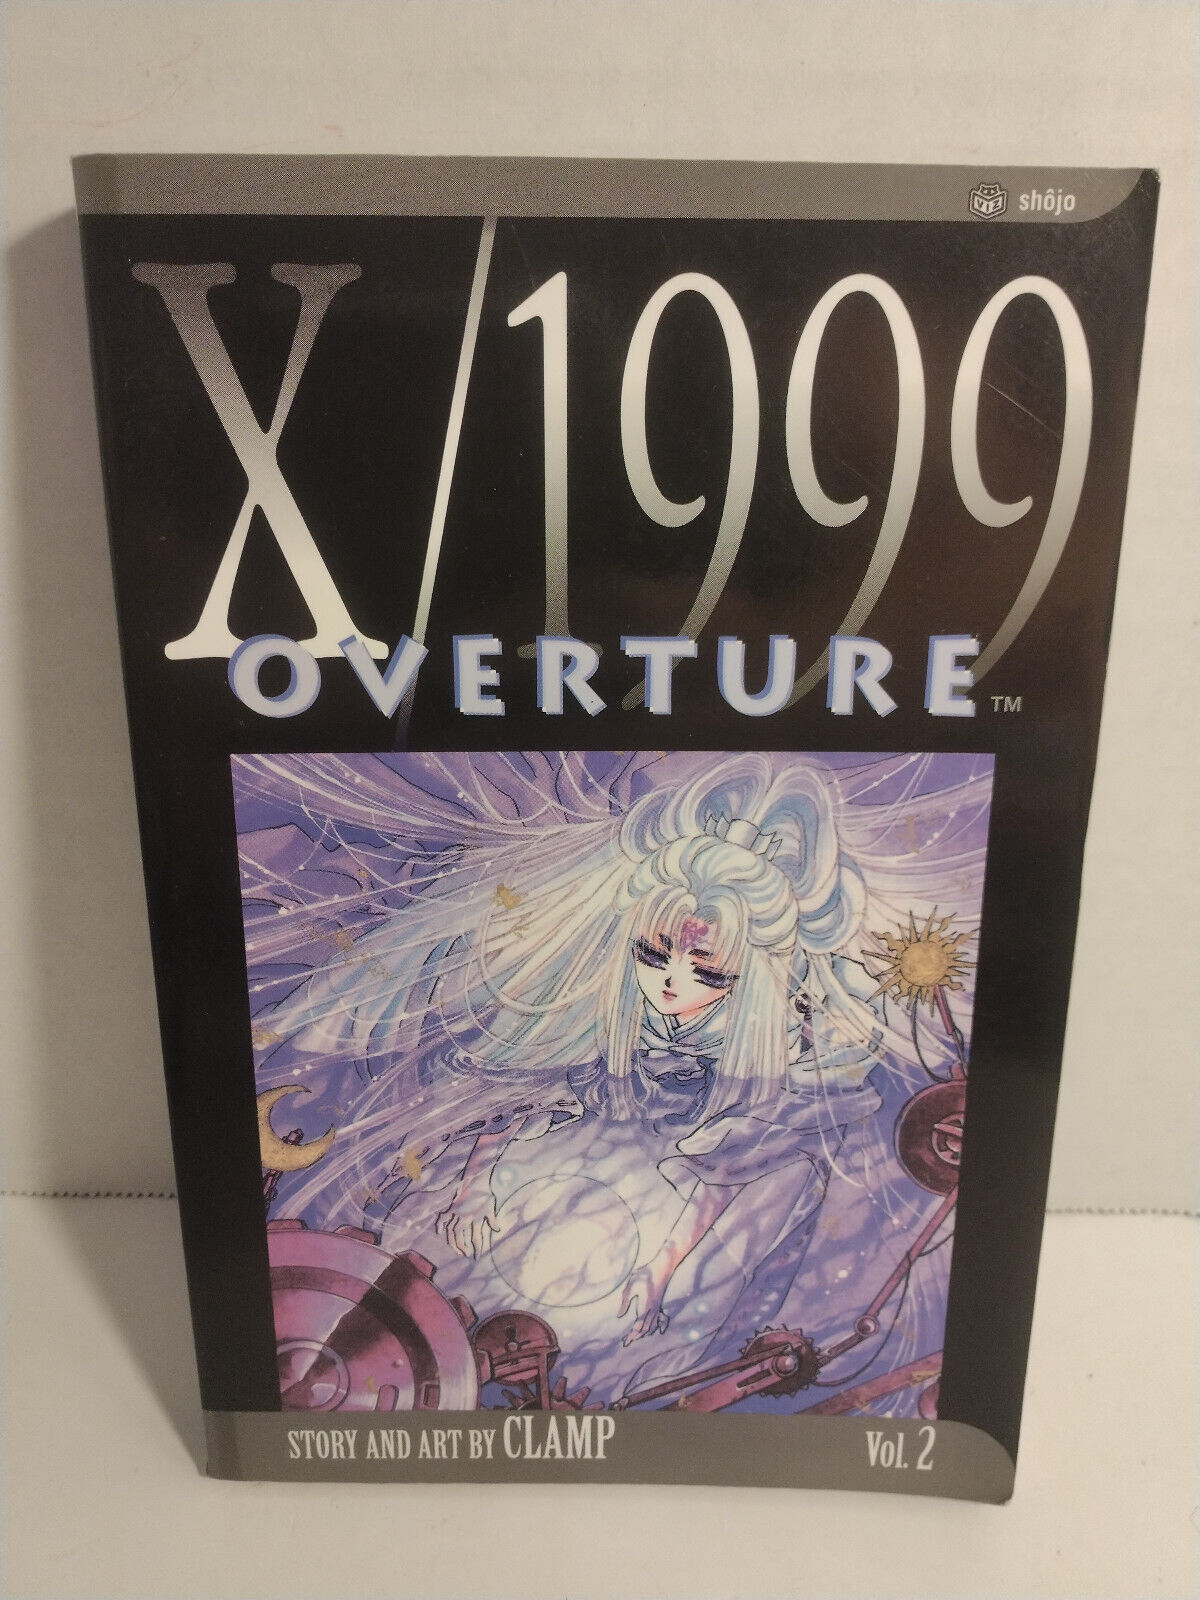 X/1999 Volume 2 Overture CLAMP Manga English Viz Media Shojo Edition OOP 2003 - $13.50